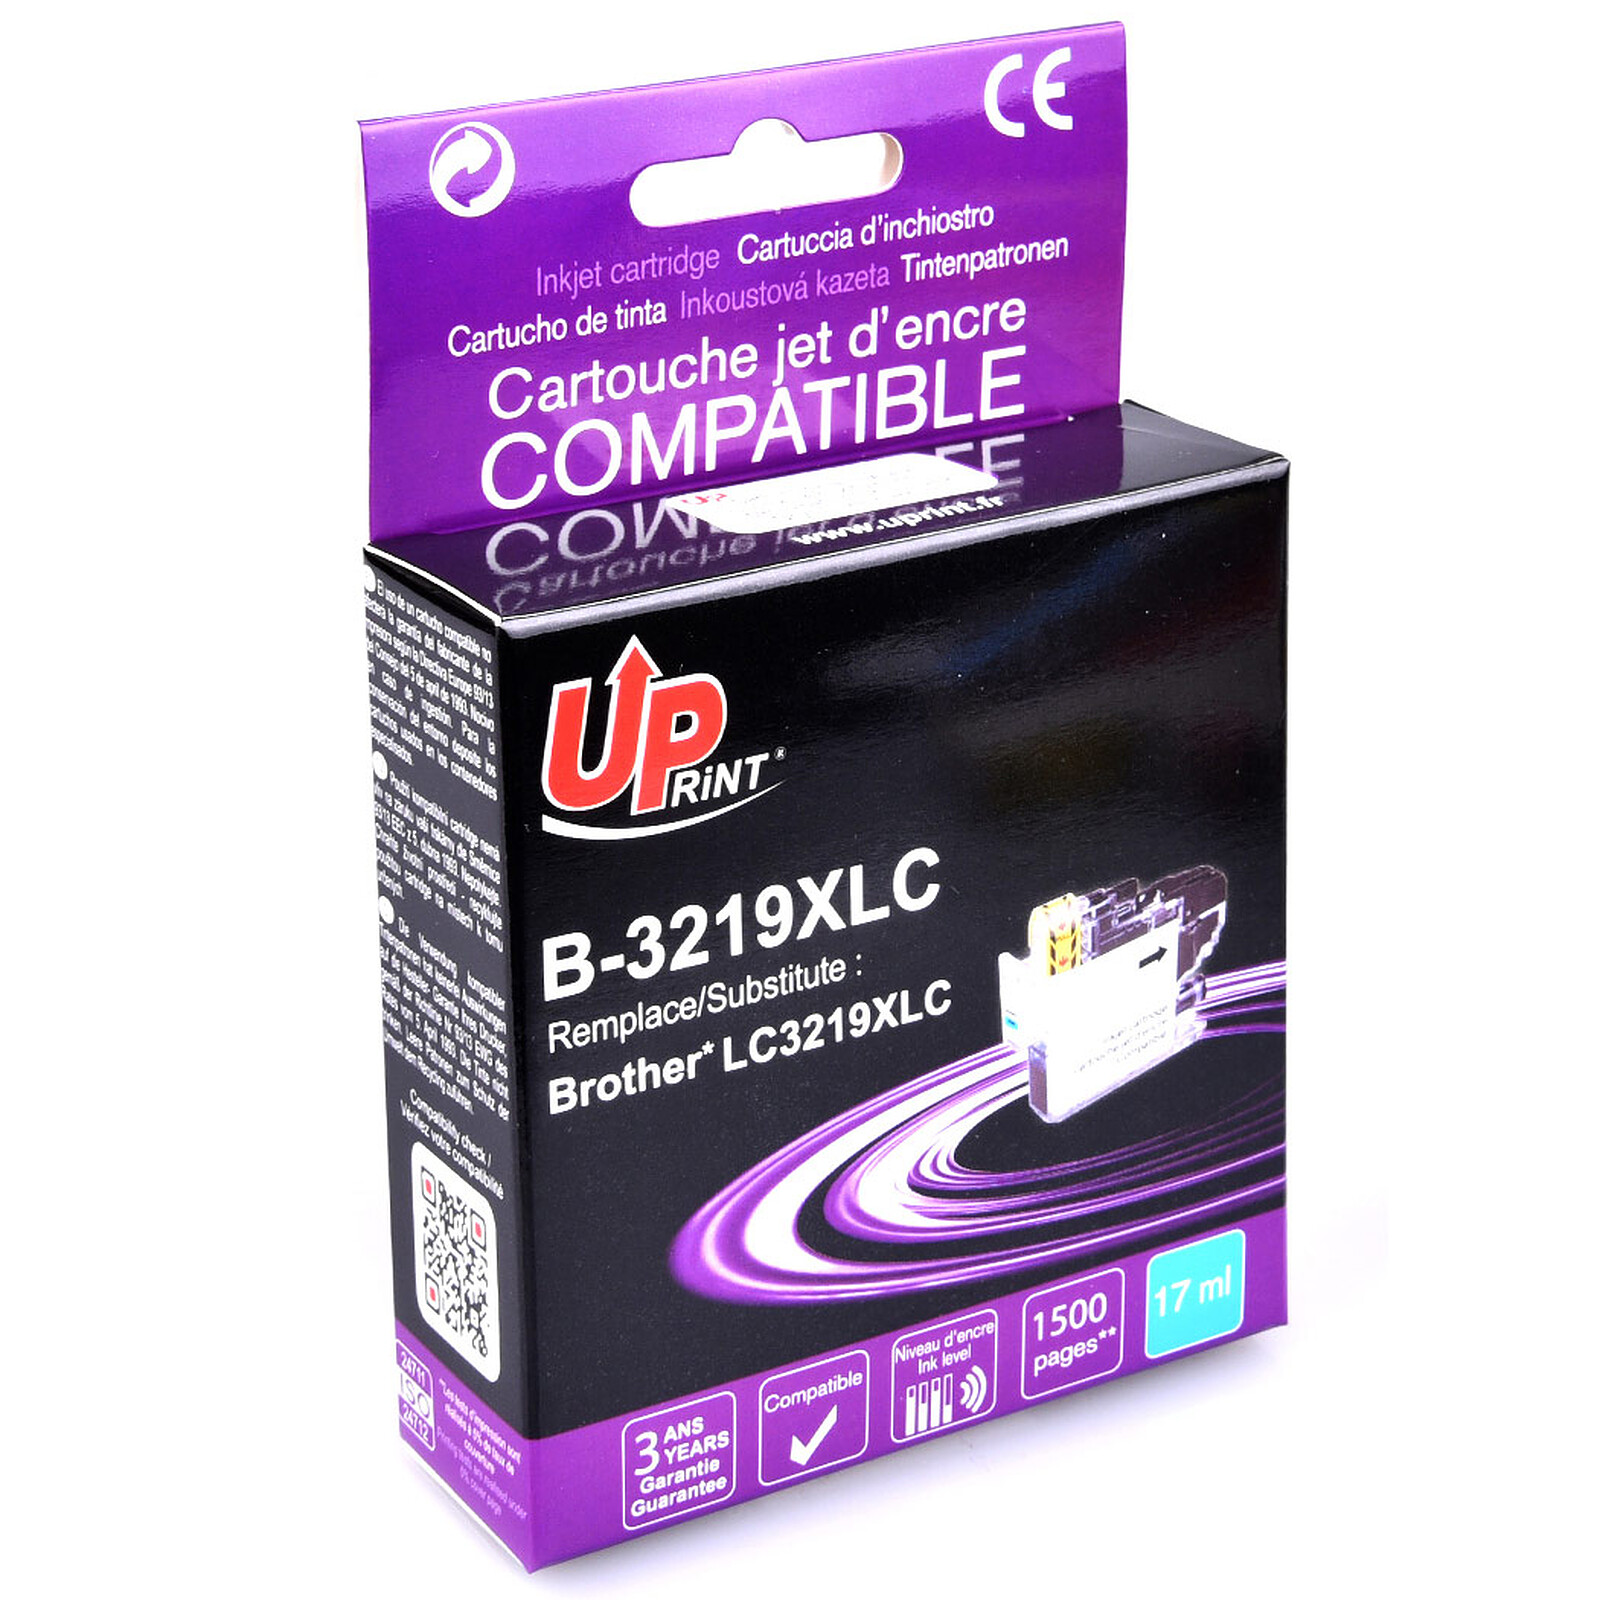 UPrint B-3219XL Cyan - Cartouche imprimante - LDLC